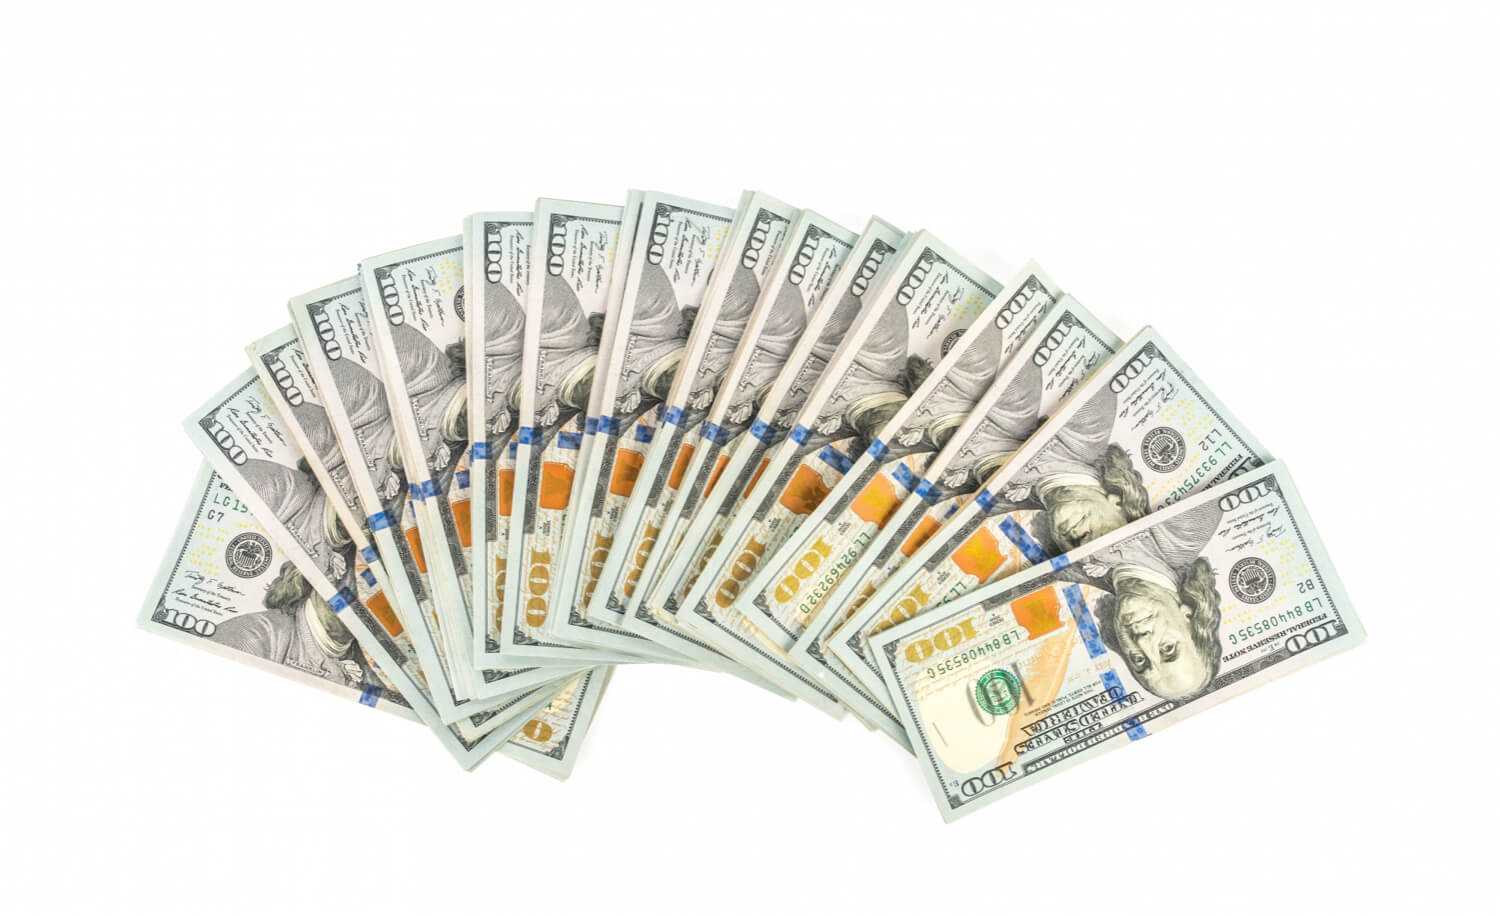 Inboxdollars Money with loads of $100 bill